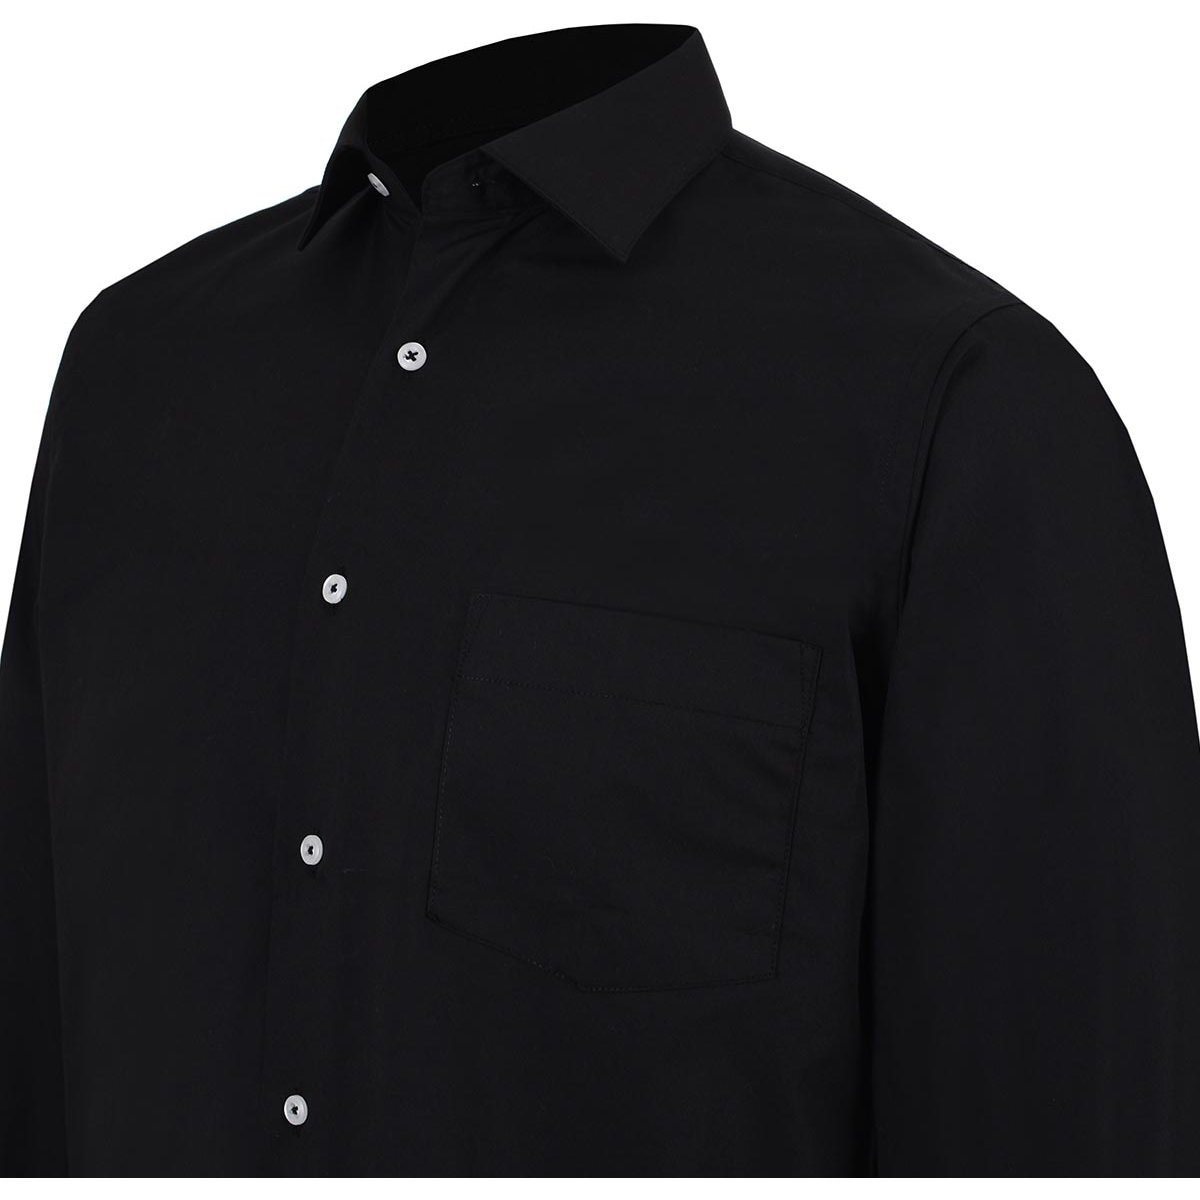 Camisa de Vestir Regular Bruno Magnani Color Negro para Hombre Modelo Elo Bm85001Ng